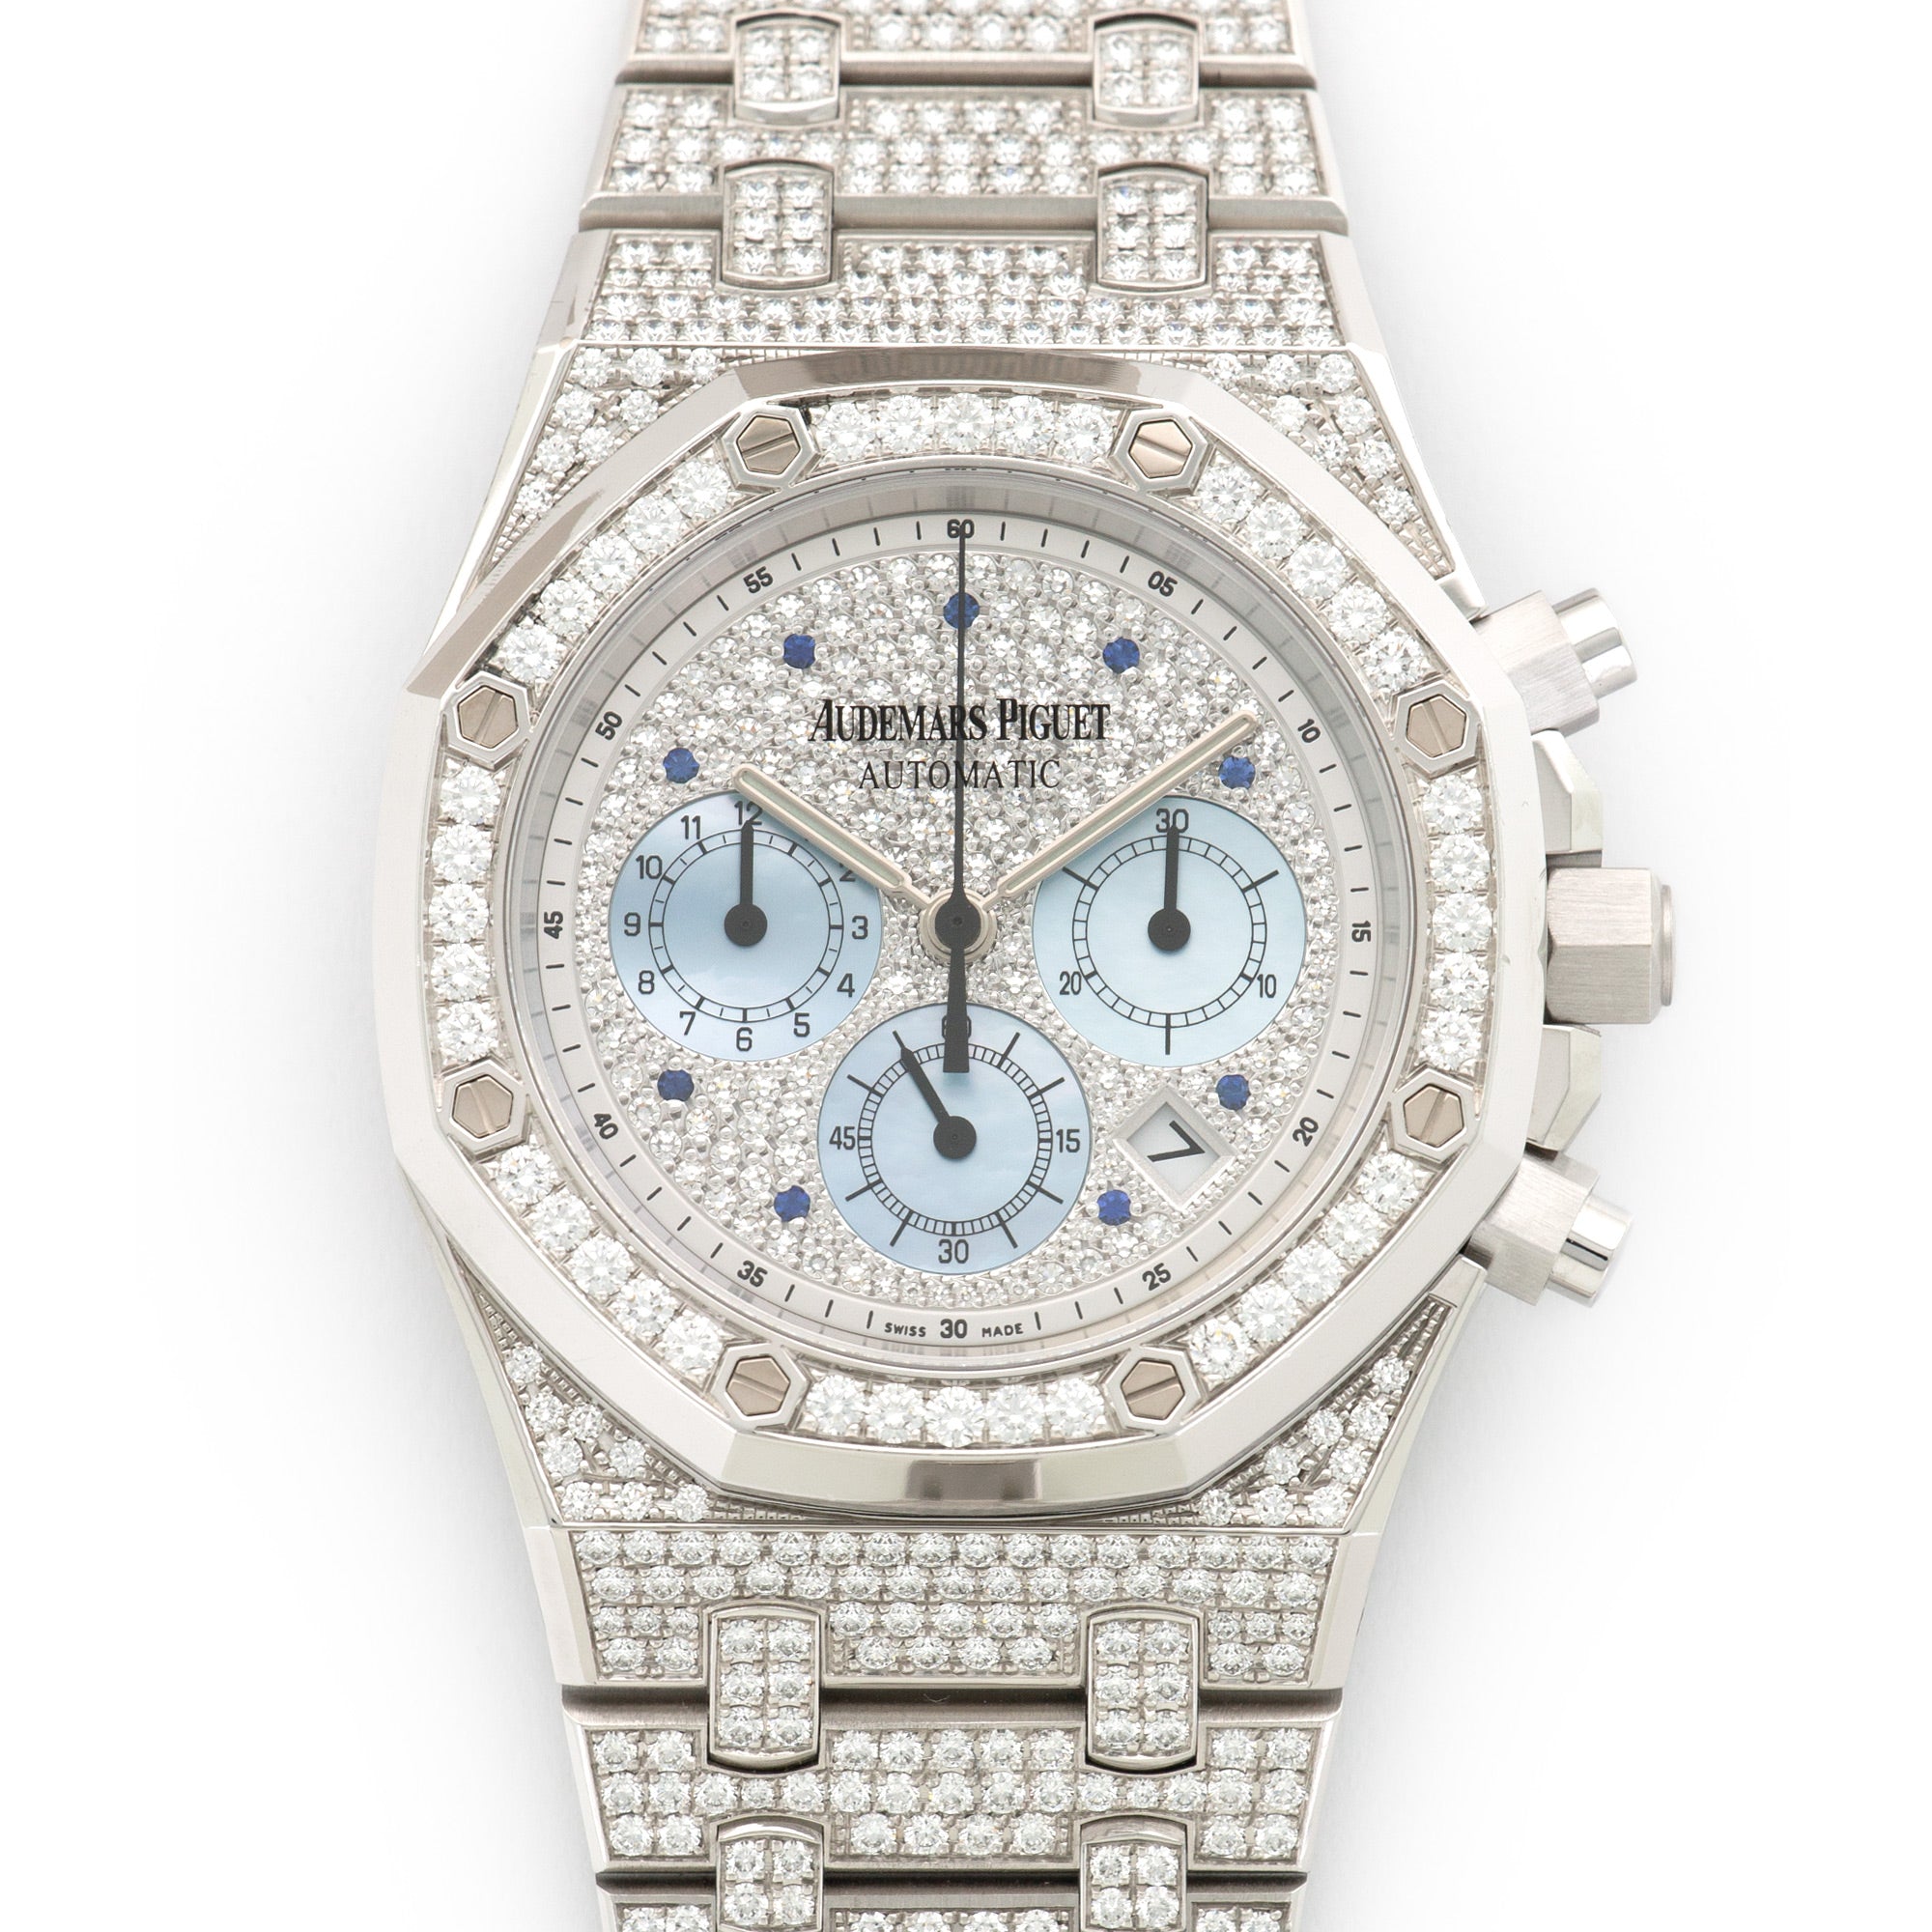 Audemars Piguet - Audemars Piguet White Gold Pave Diamond Royal Oak Chrono Watch Ref. 25978 - The Keystone Watches